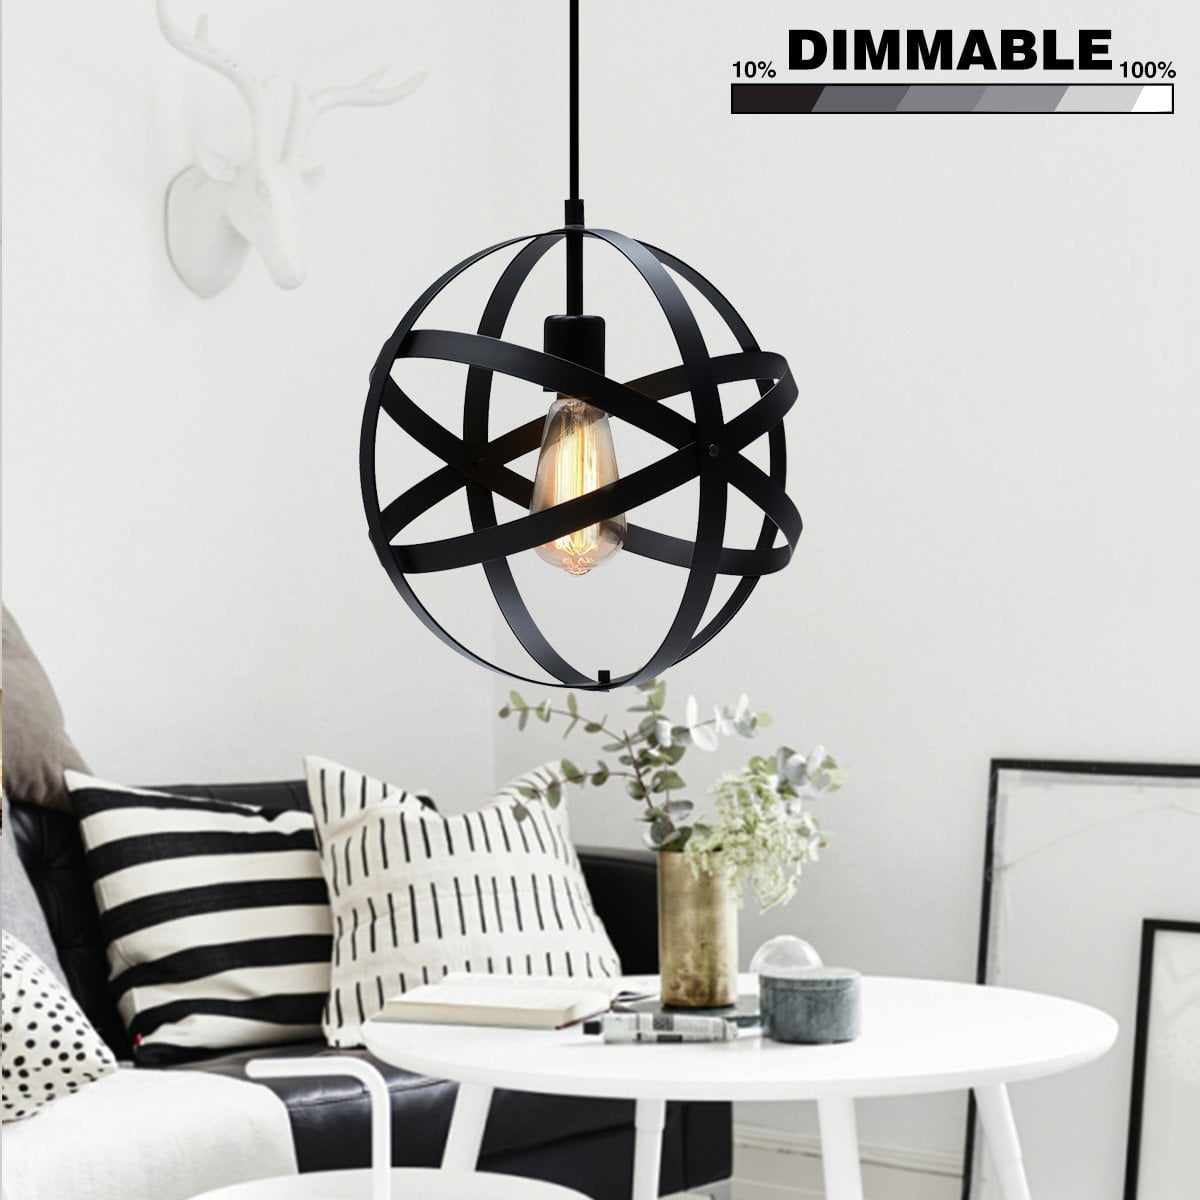 Black Industrial Globe Pendant Lighting, Black Light Fixture Kitchen Table